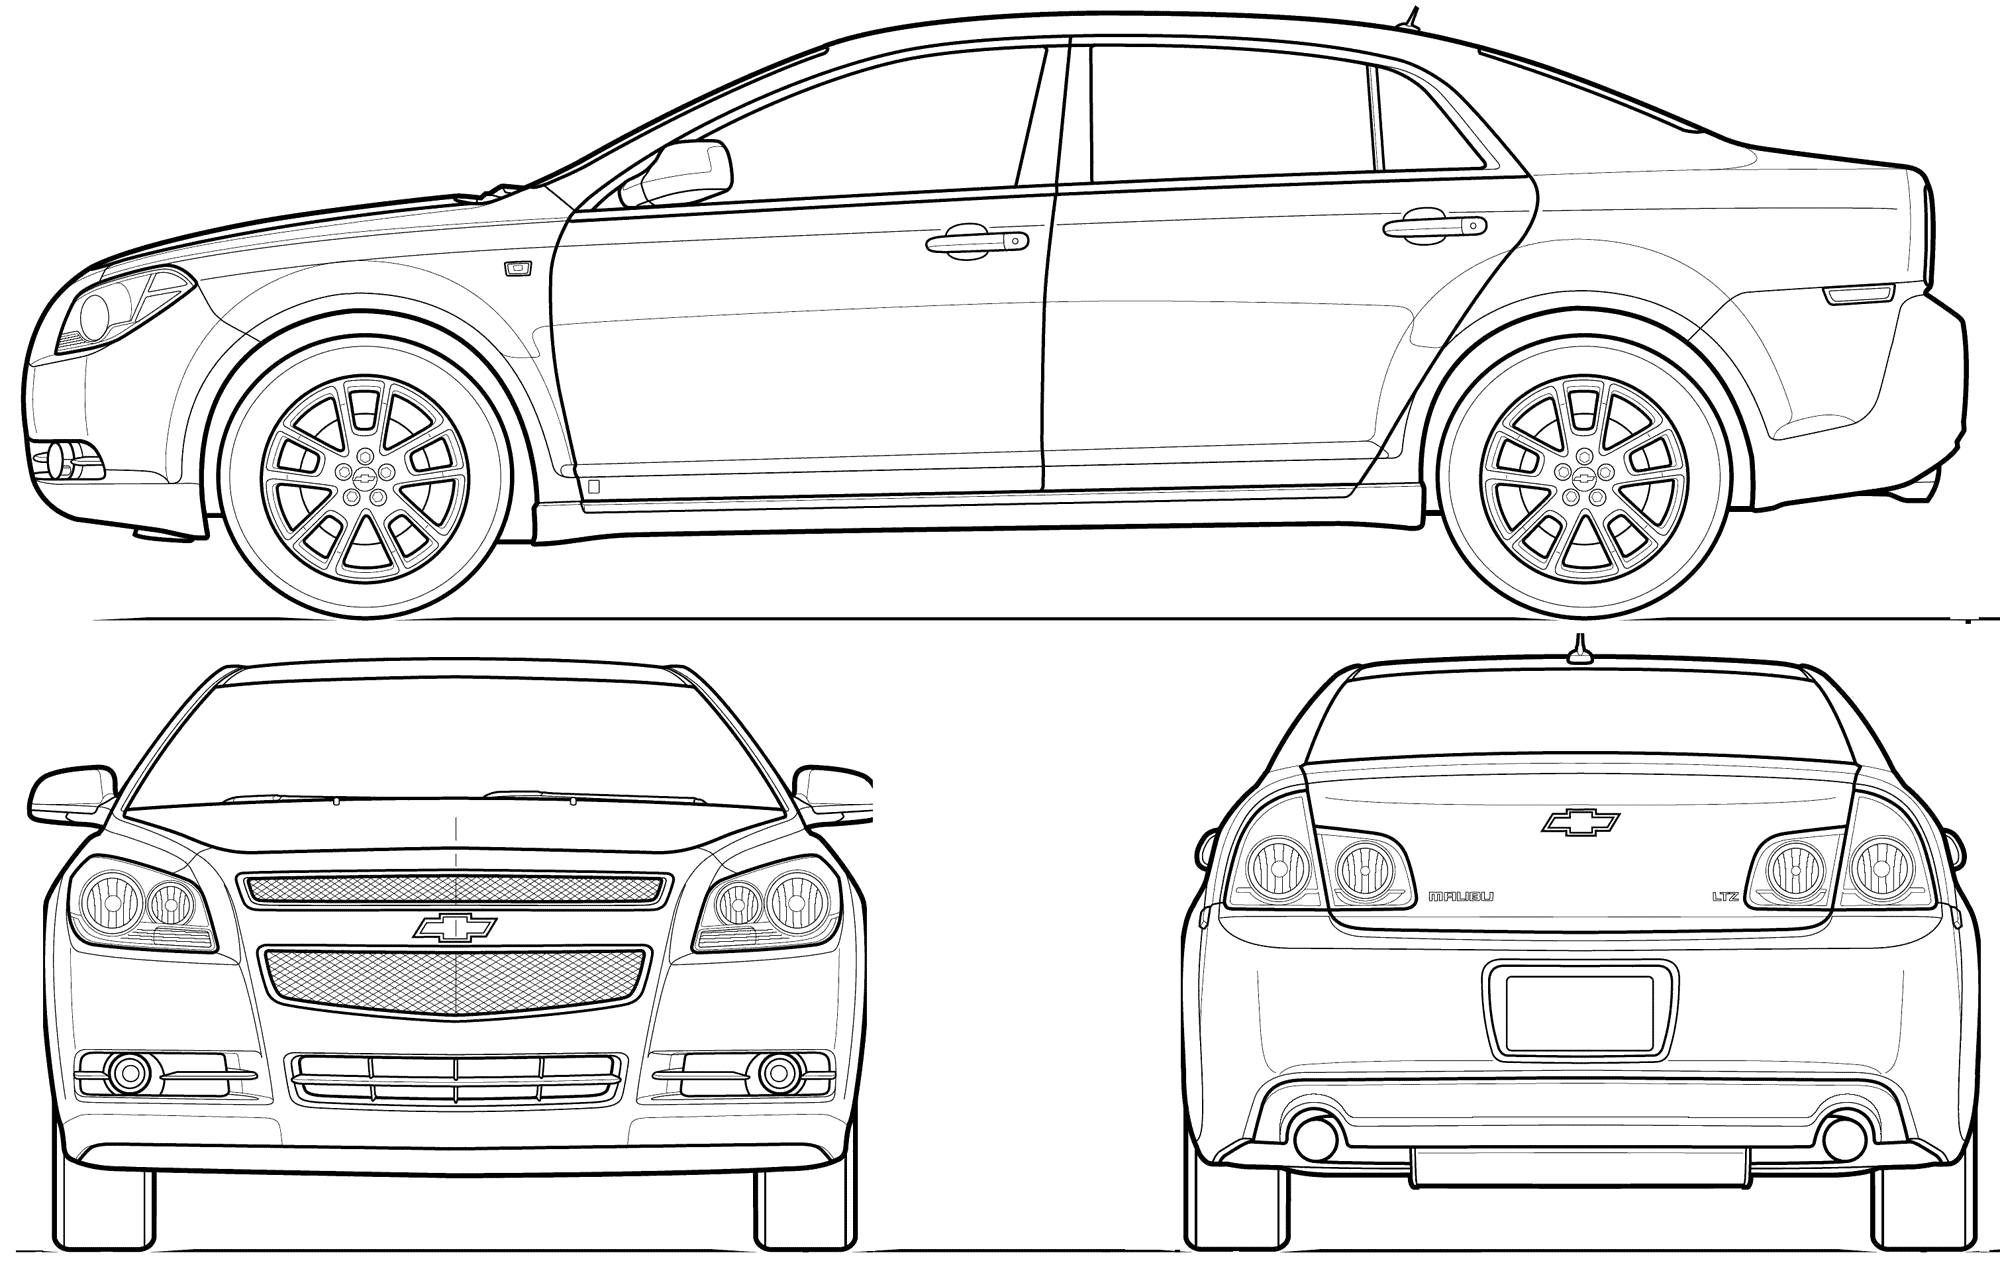 2008 Chevrolet Malibu Sedan blueprints free - Outlines